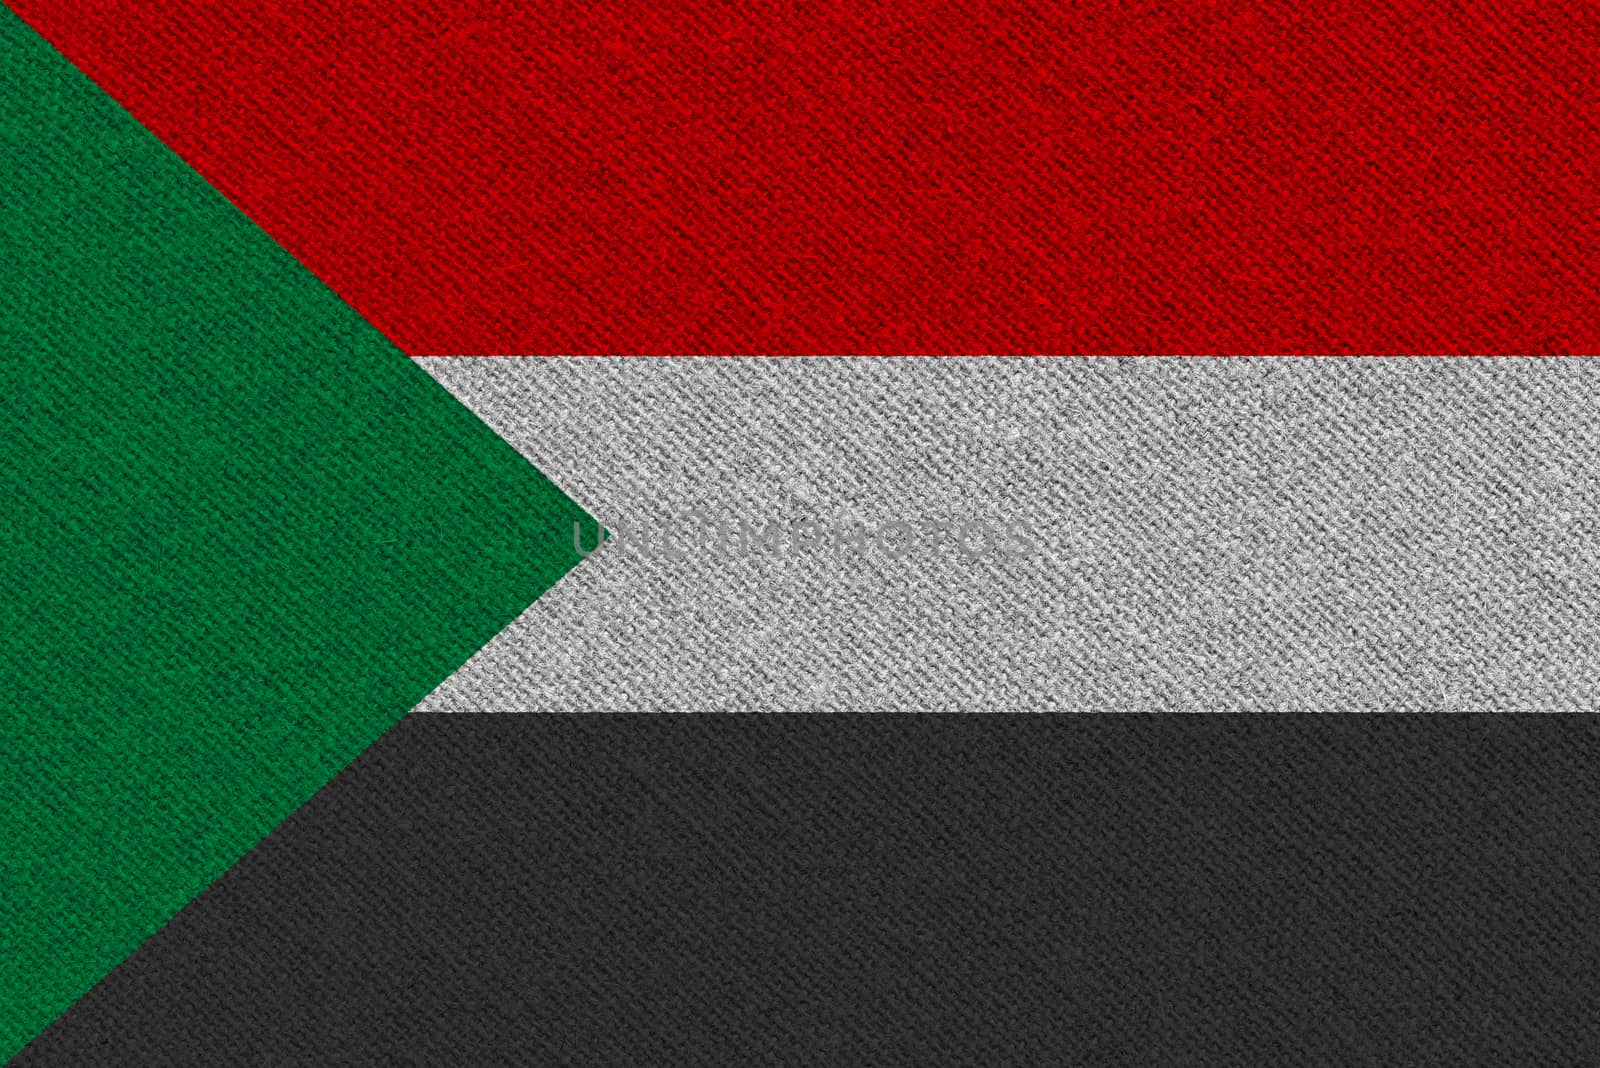 Sudan fabric flag. Patriotic background. National flag of Sudan